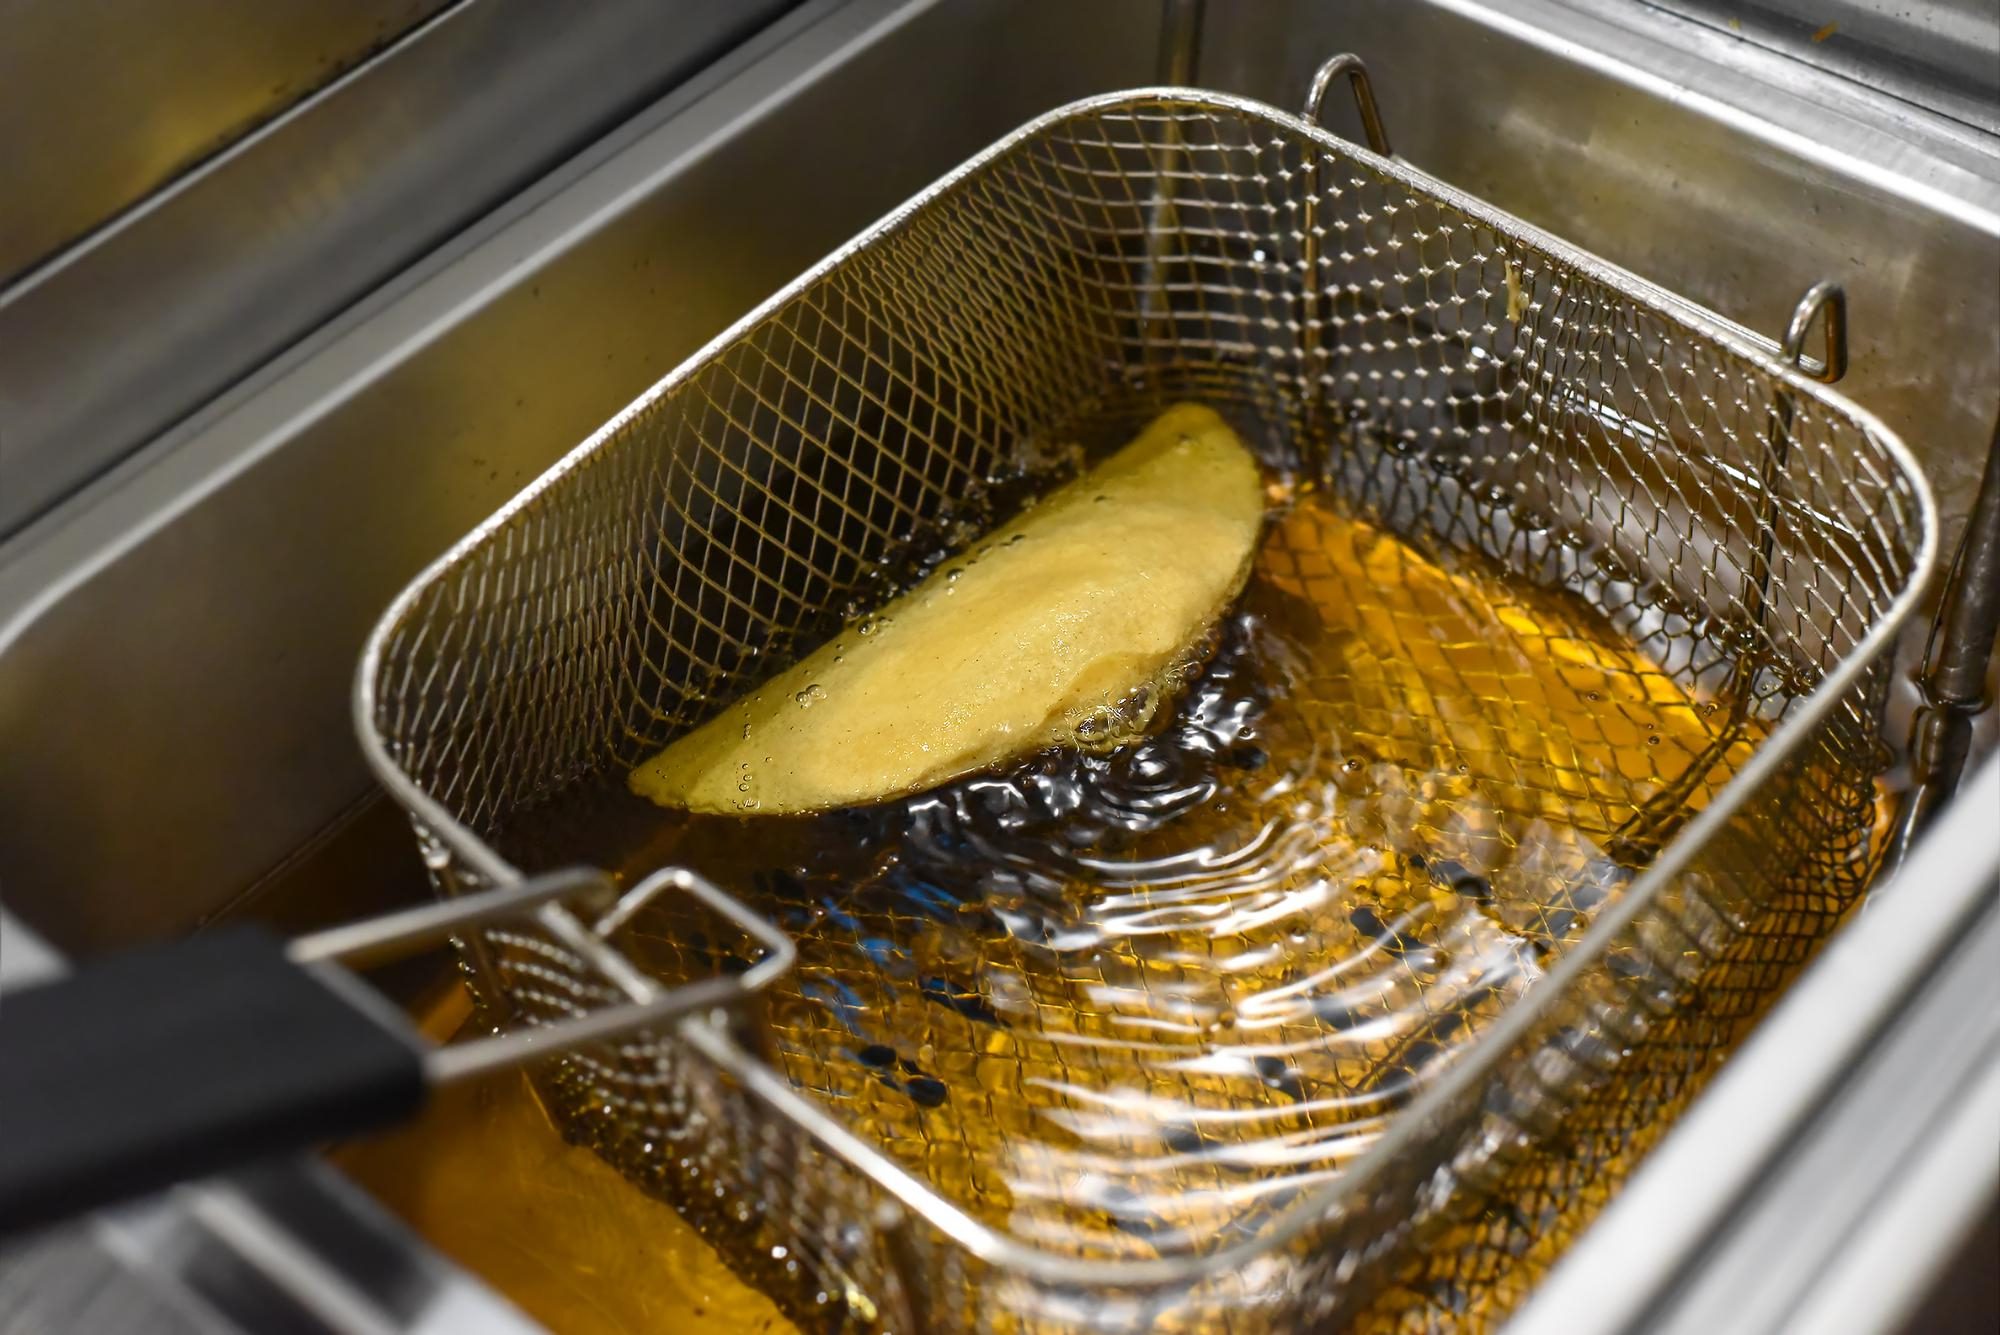 Golden fryer oil bubbles around a crispy snack in a mesh basket, showcasing efficient Fryer Oil Management Tips.